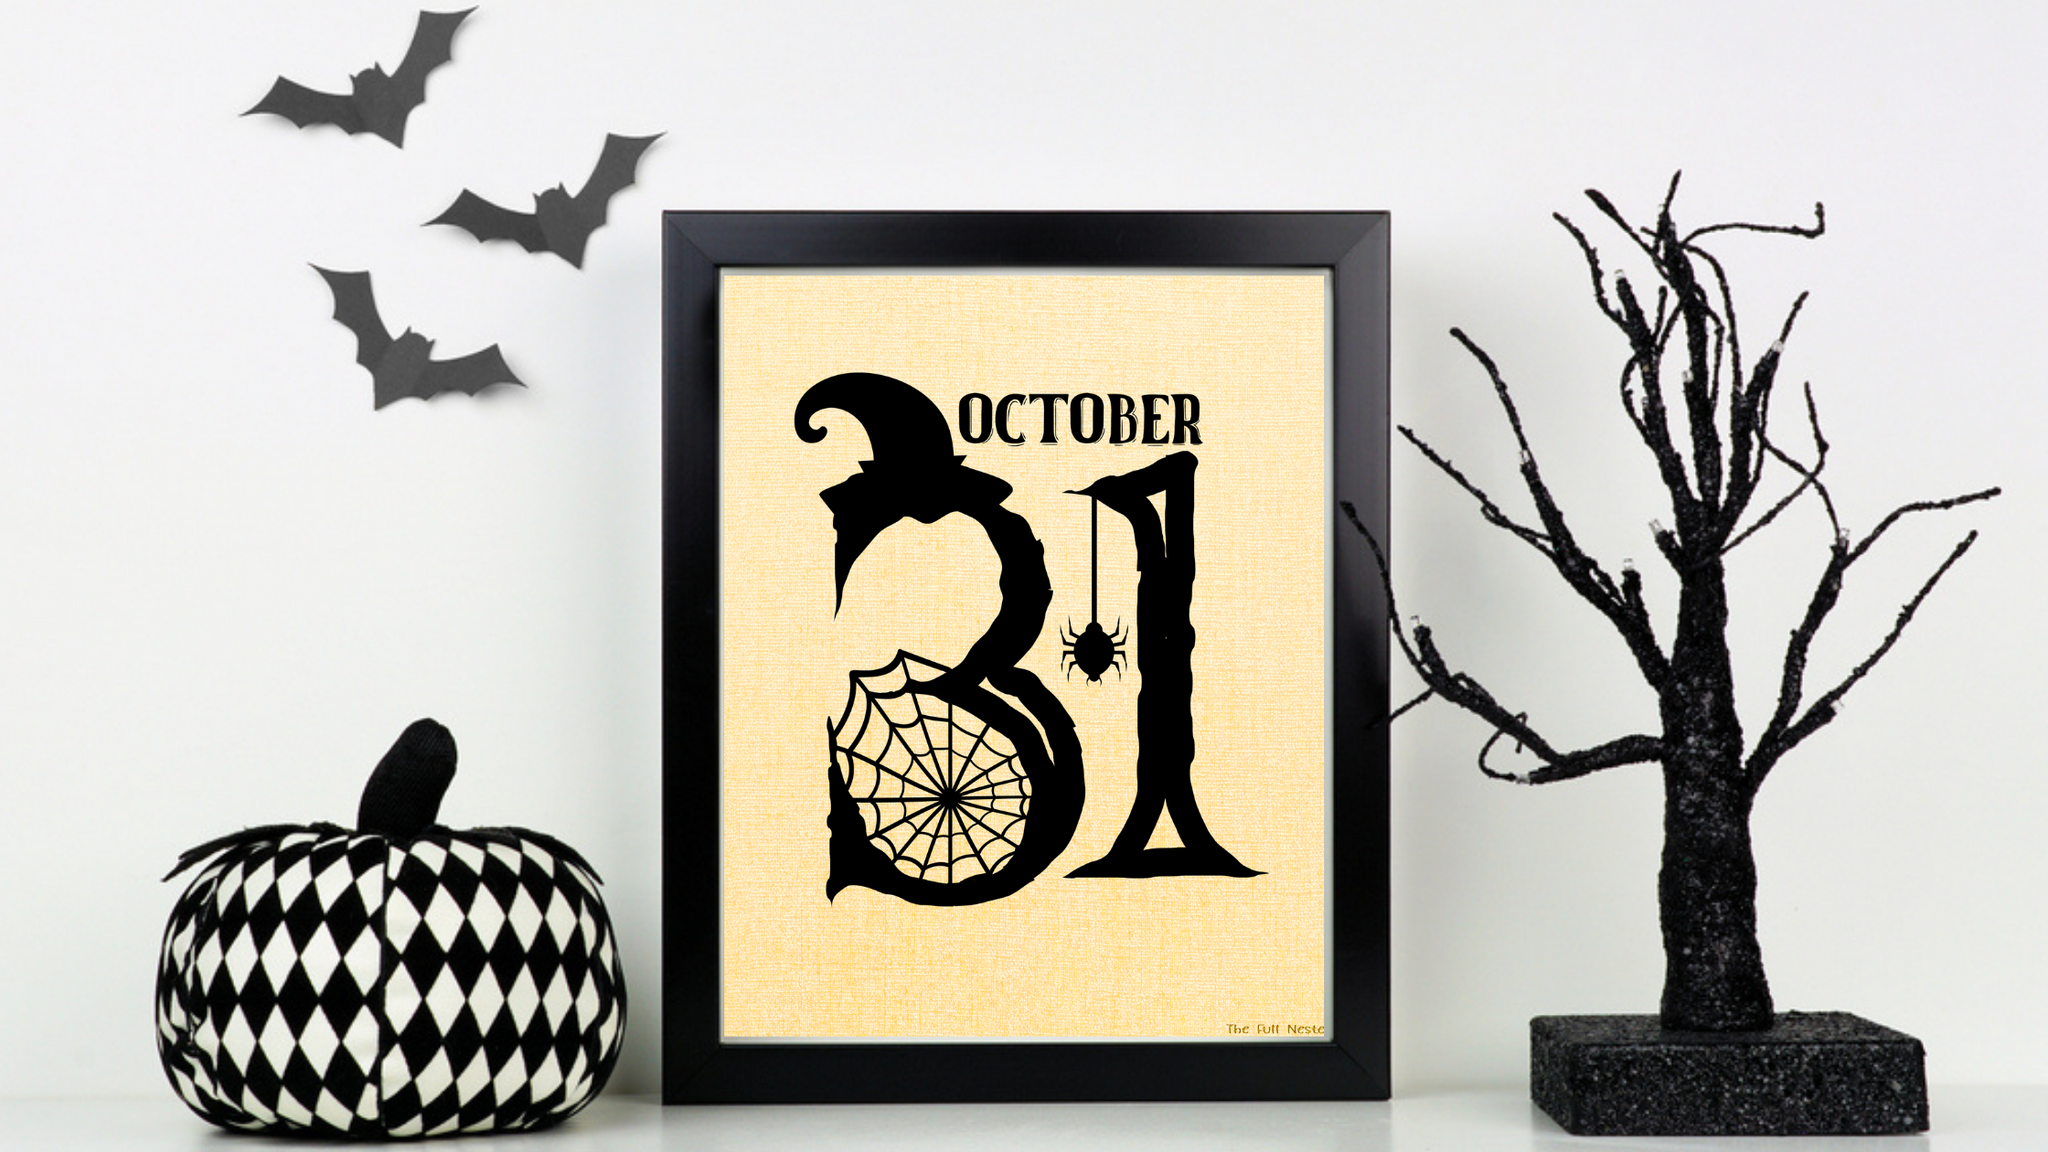 October 31st Halloween Printable